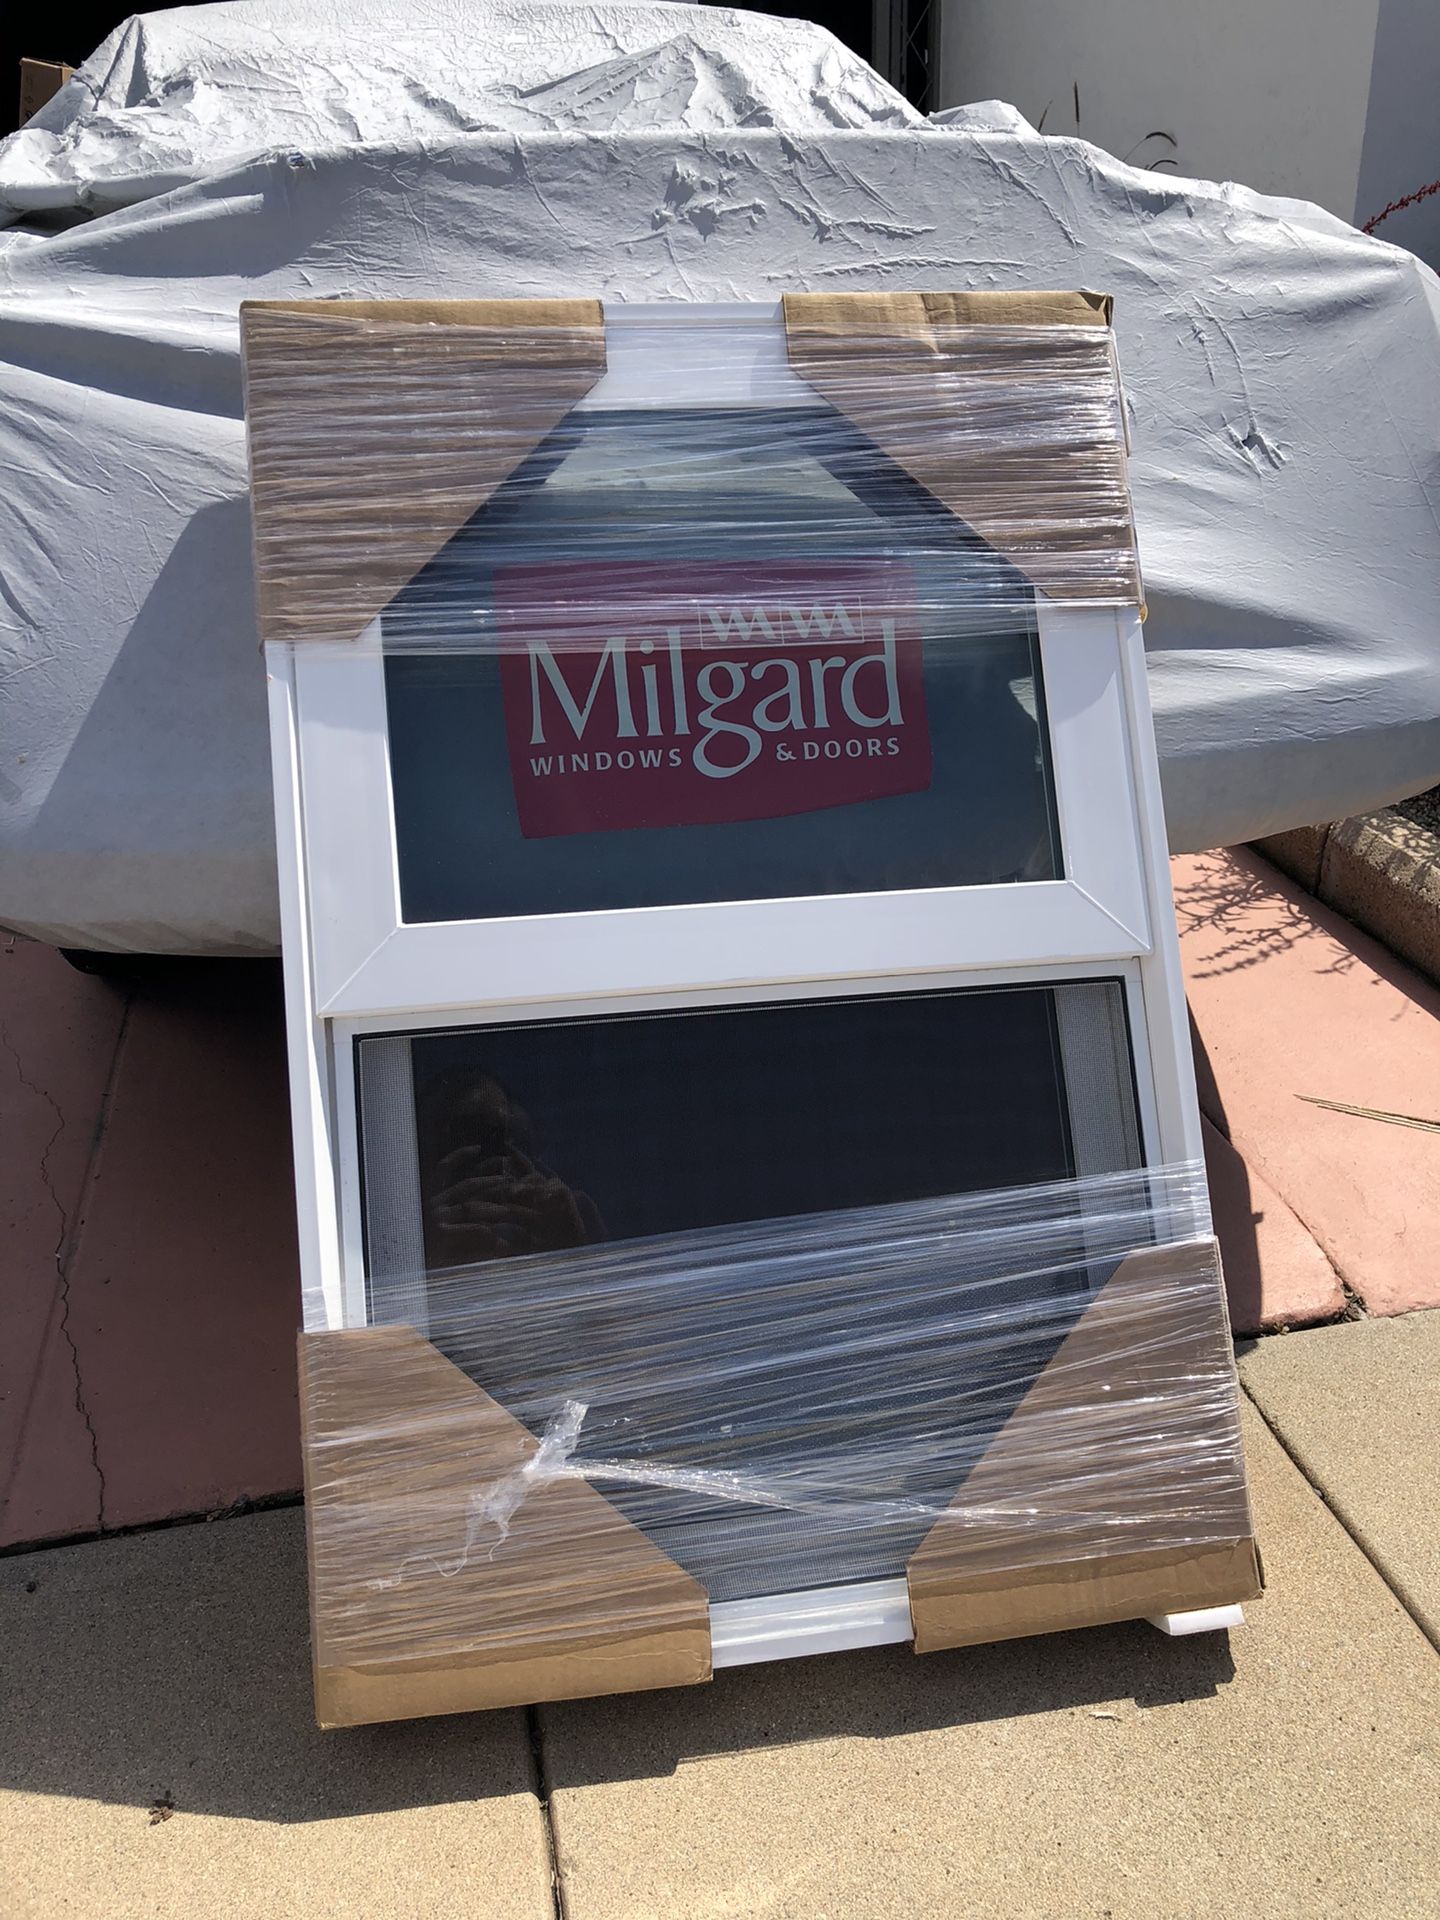 Milgard Tuscany brand new window 24x36” for Sale in San Diego, CA - OfferUp